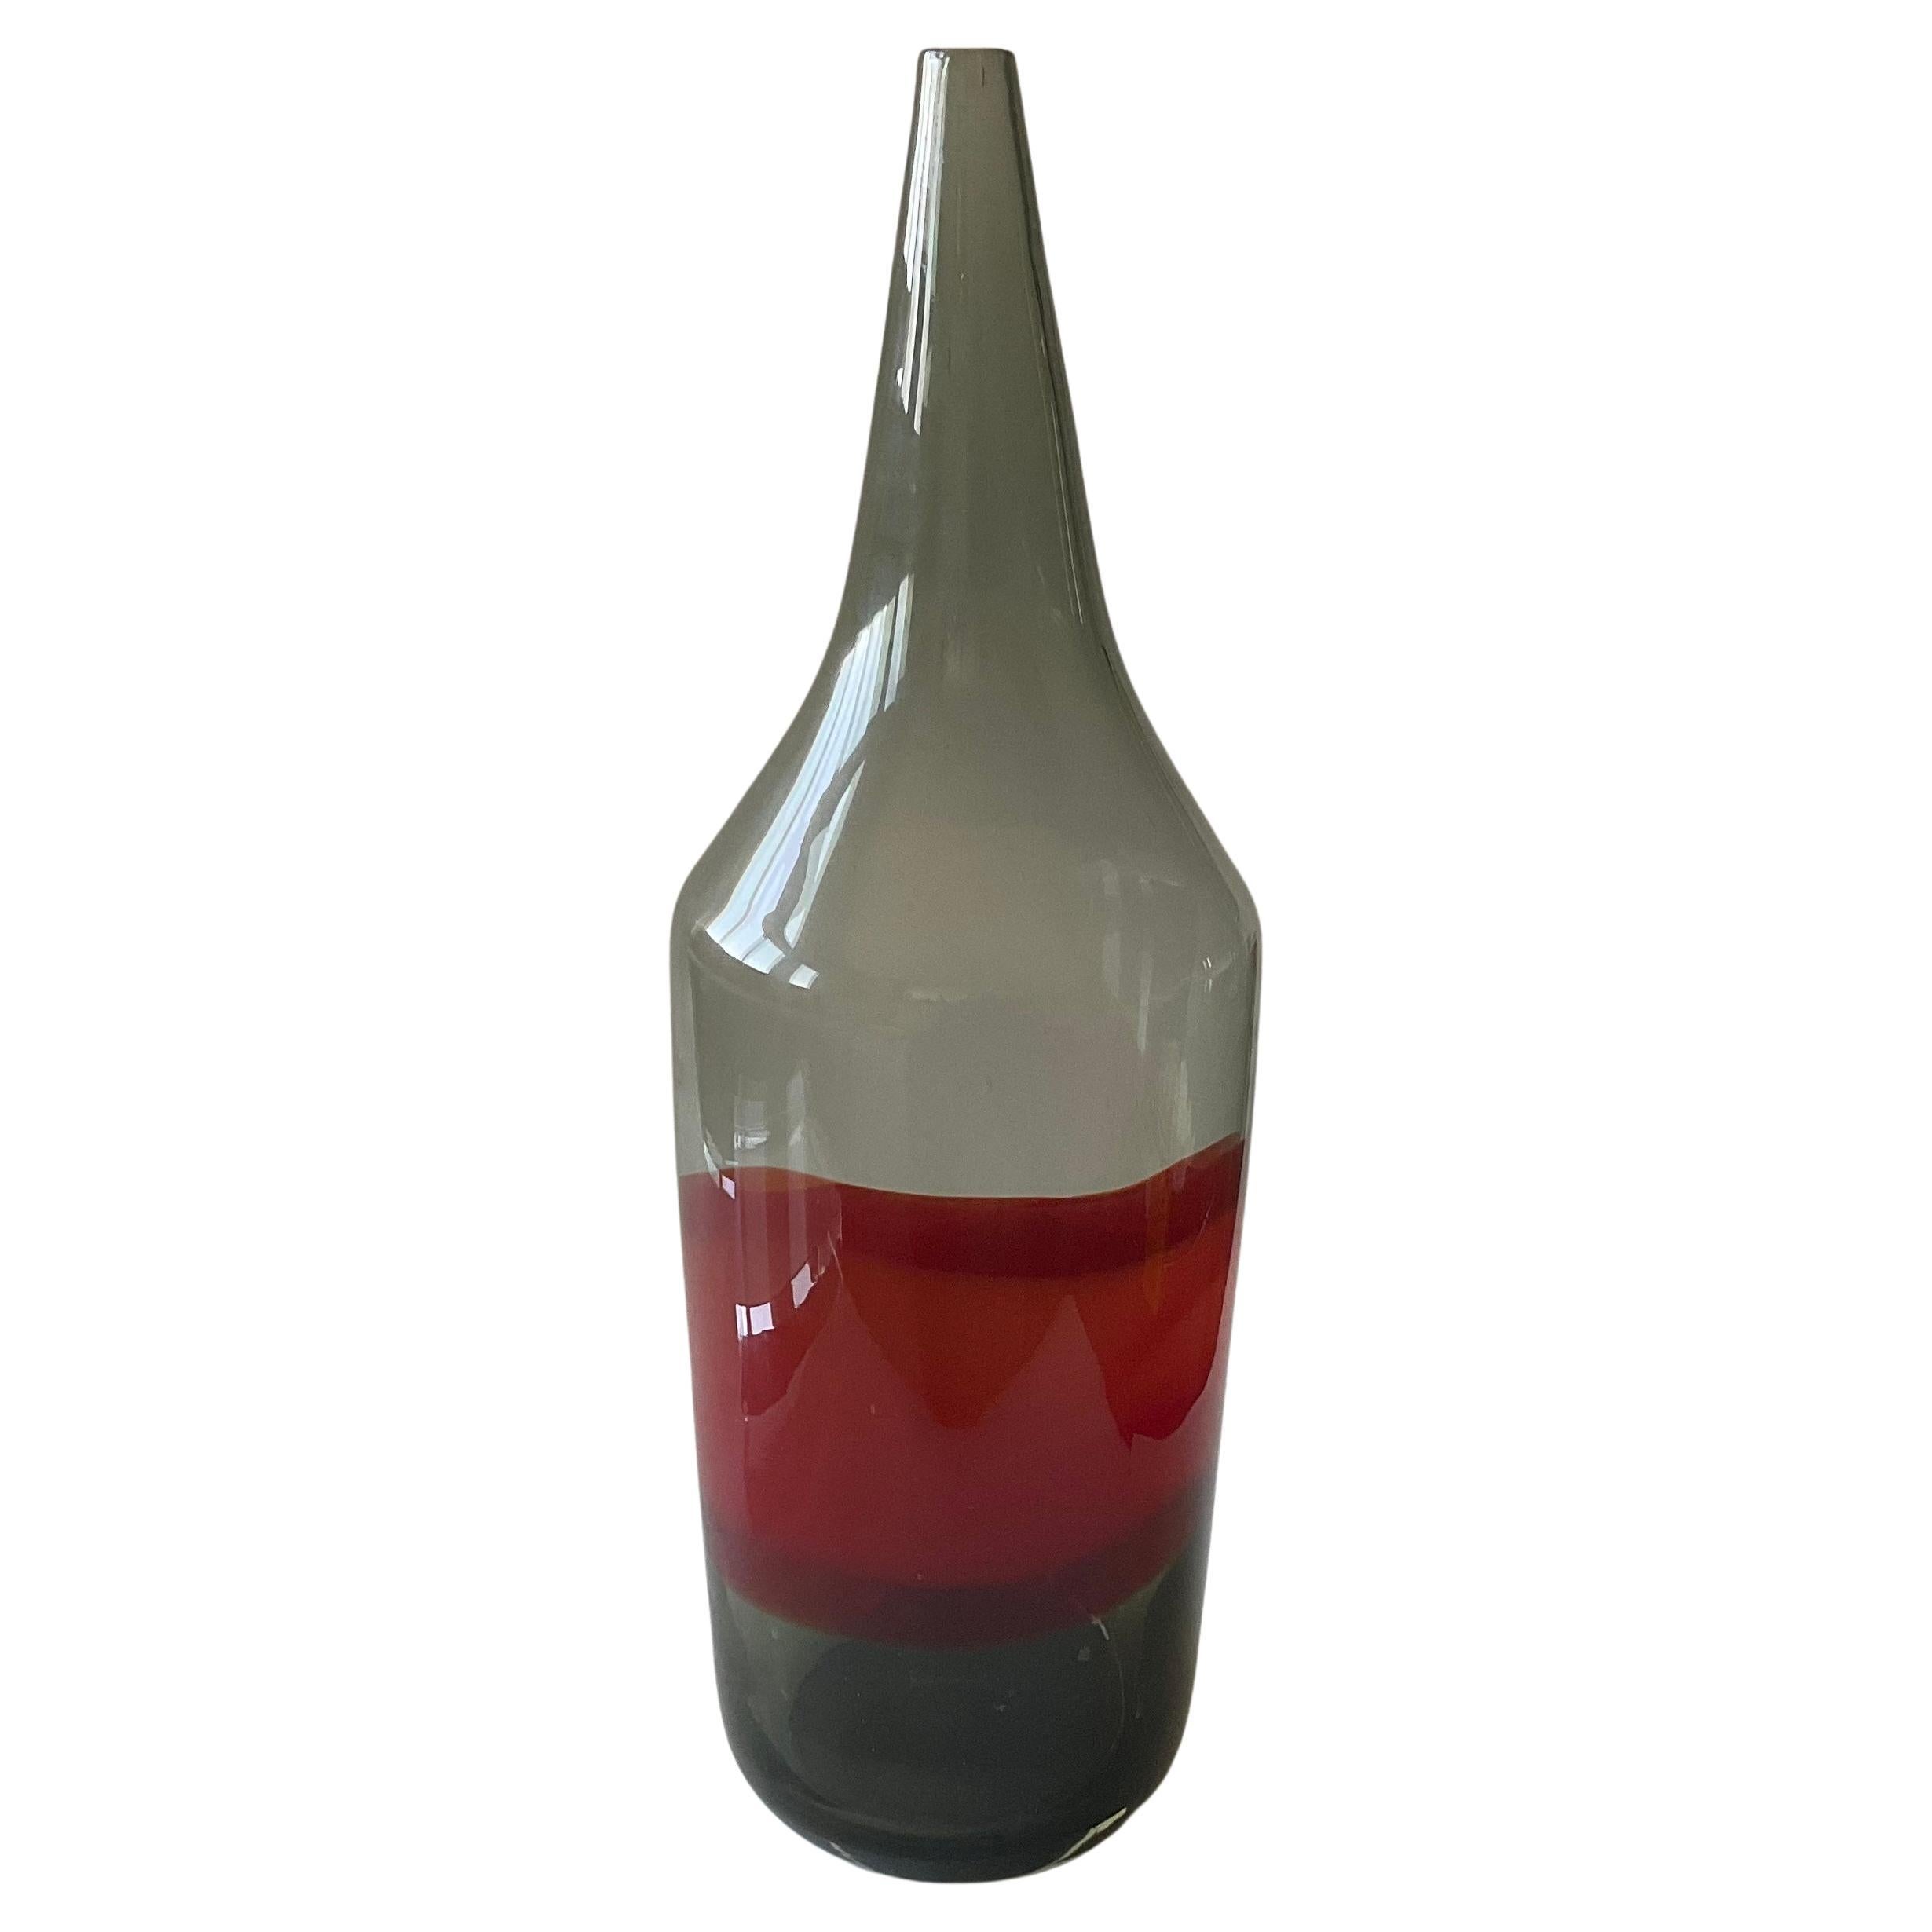 Grand vase en verre de Murano incalmo gris fumée avec bande rouge signé Vistosi 